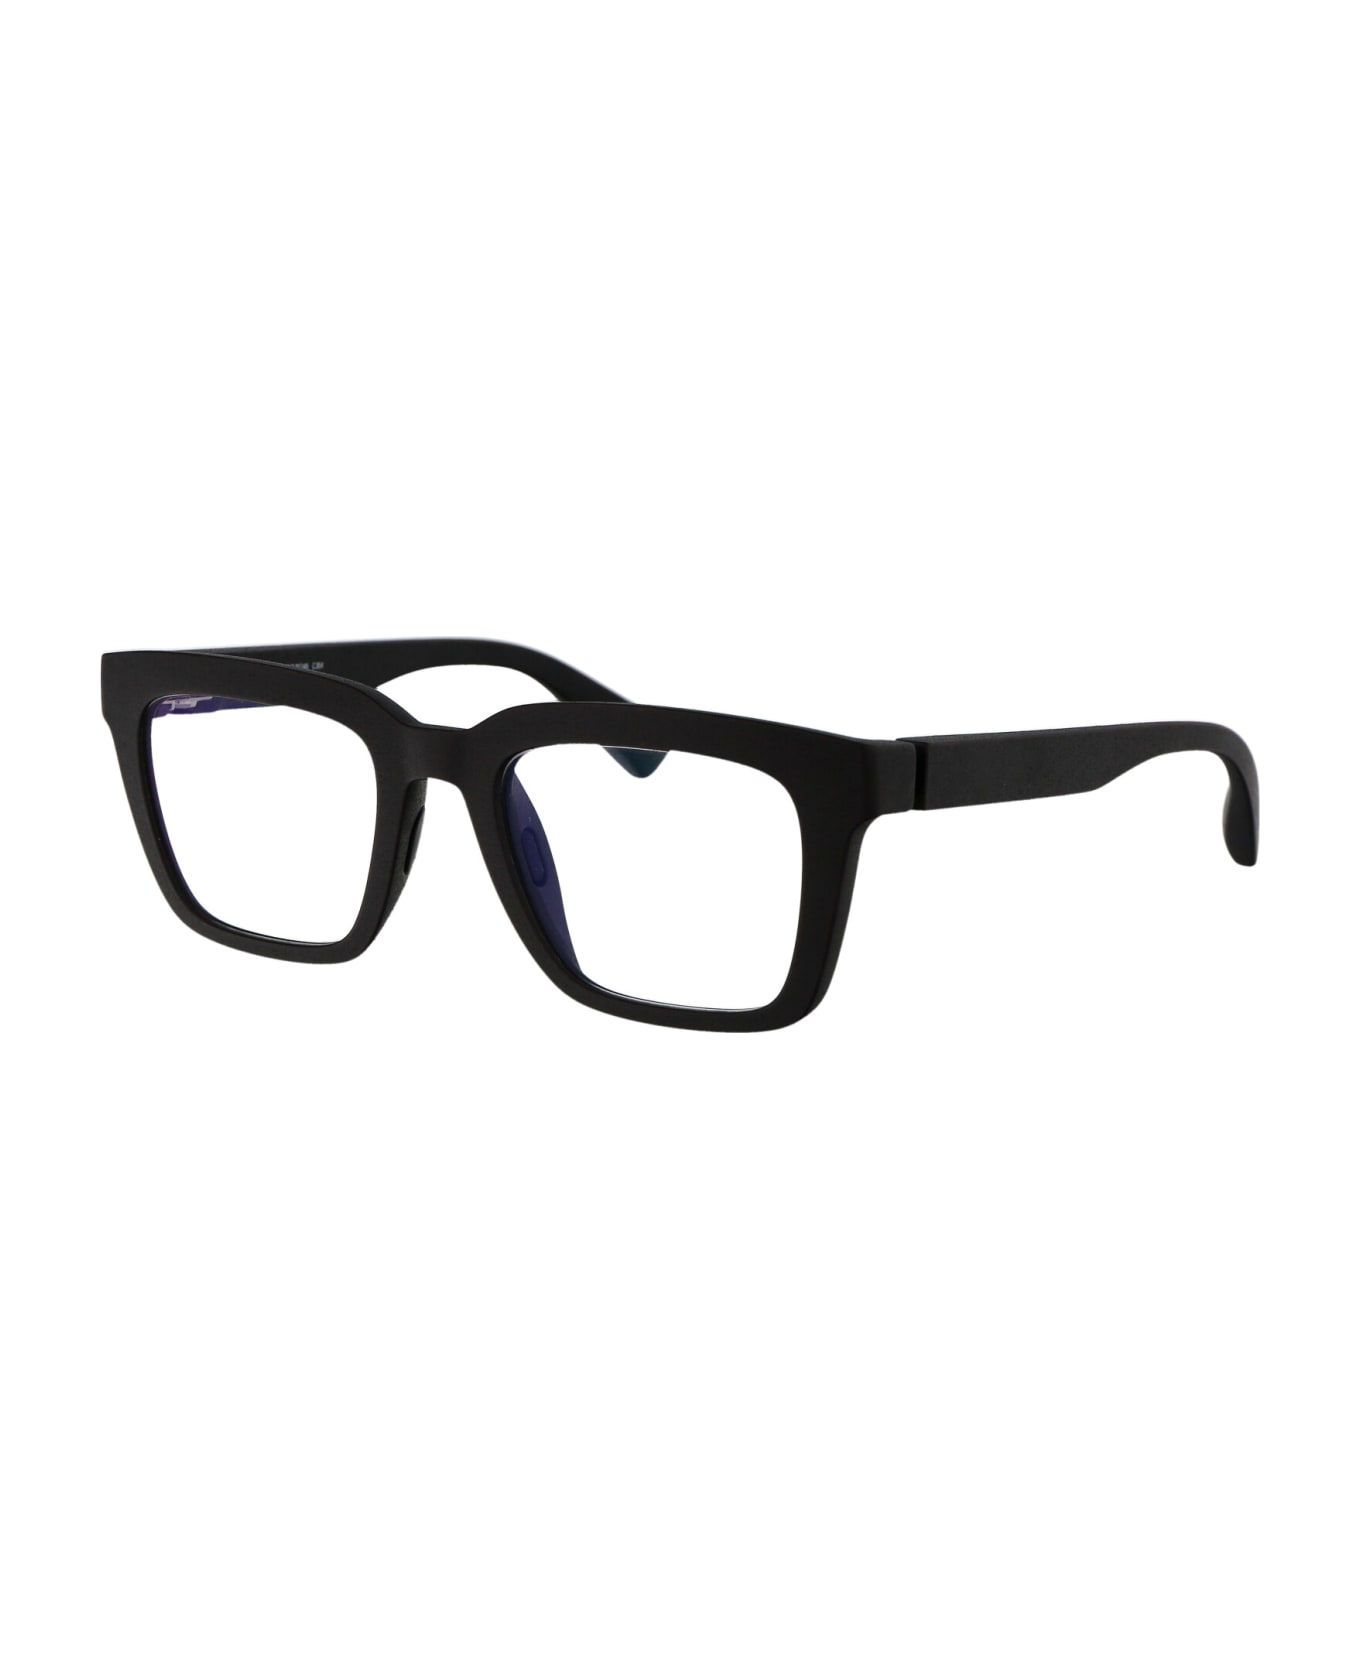 Mykita Souda Glasses - 354 MD1-Pitch Black Clear